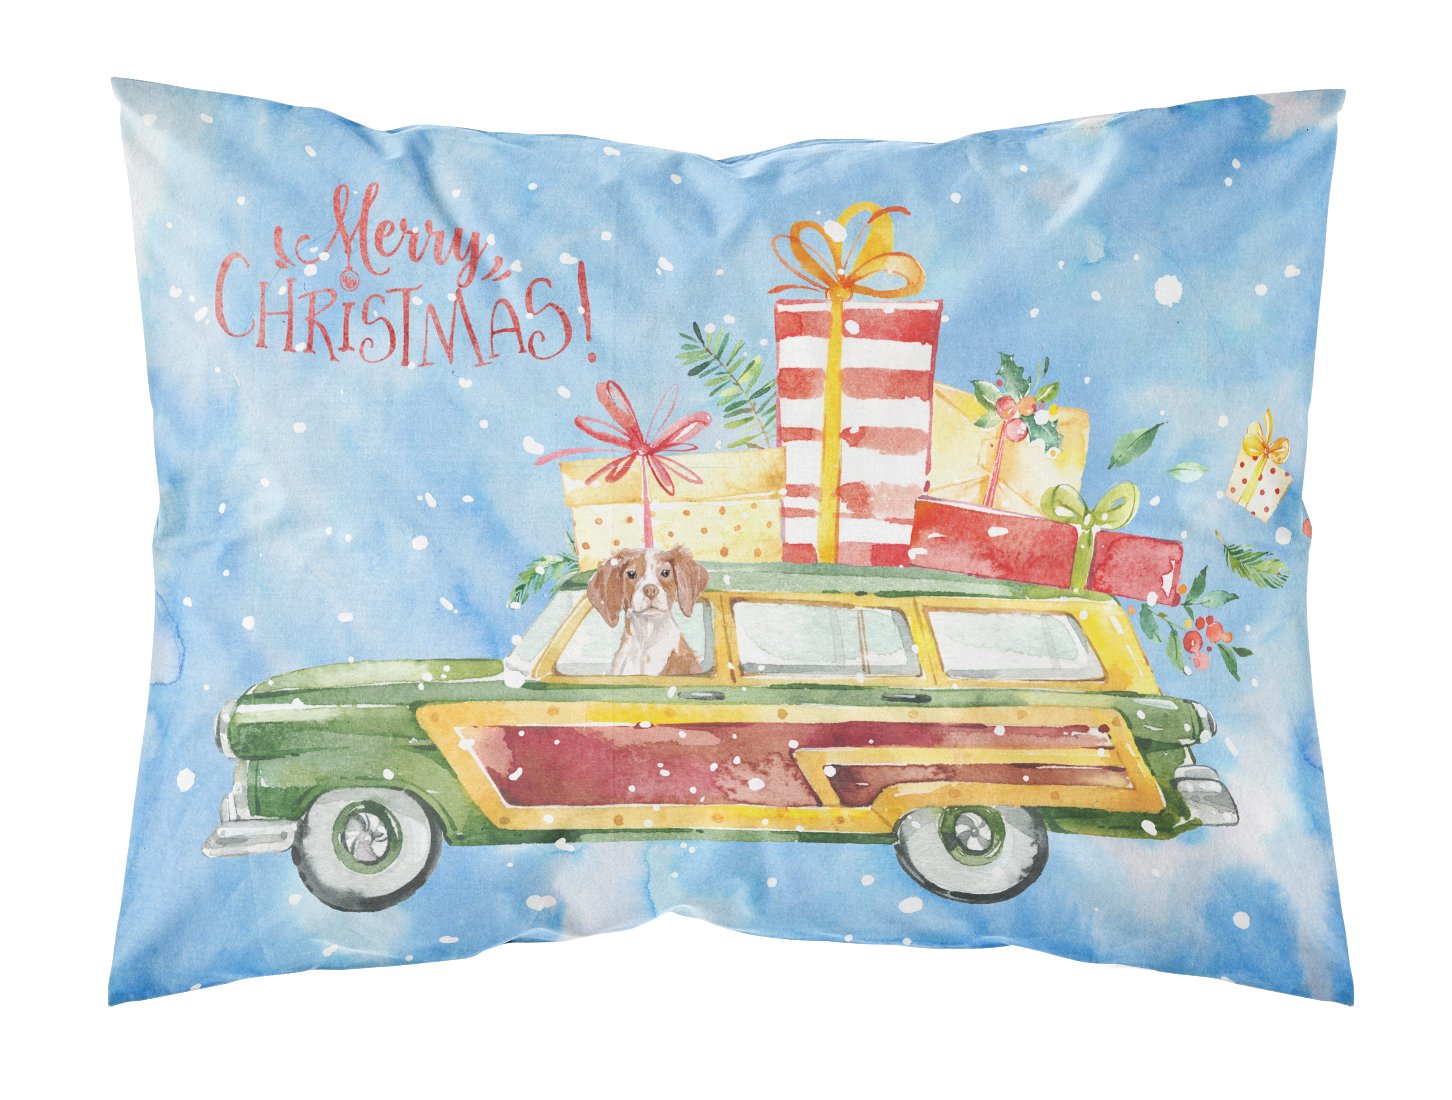 Merry Christmas Brittany Spaniel Fabric Standard Pillowcase CK2436PILLOWCASE by Caroline's Treasures